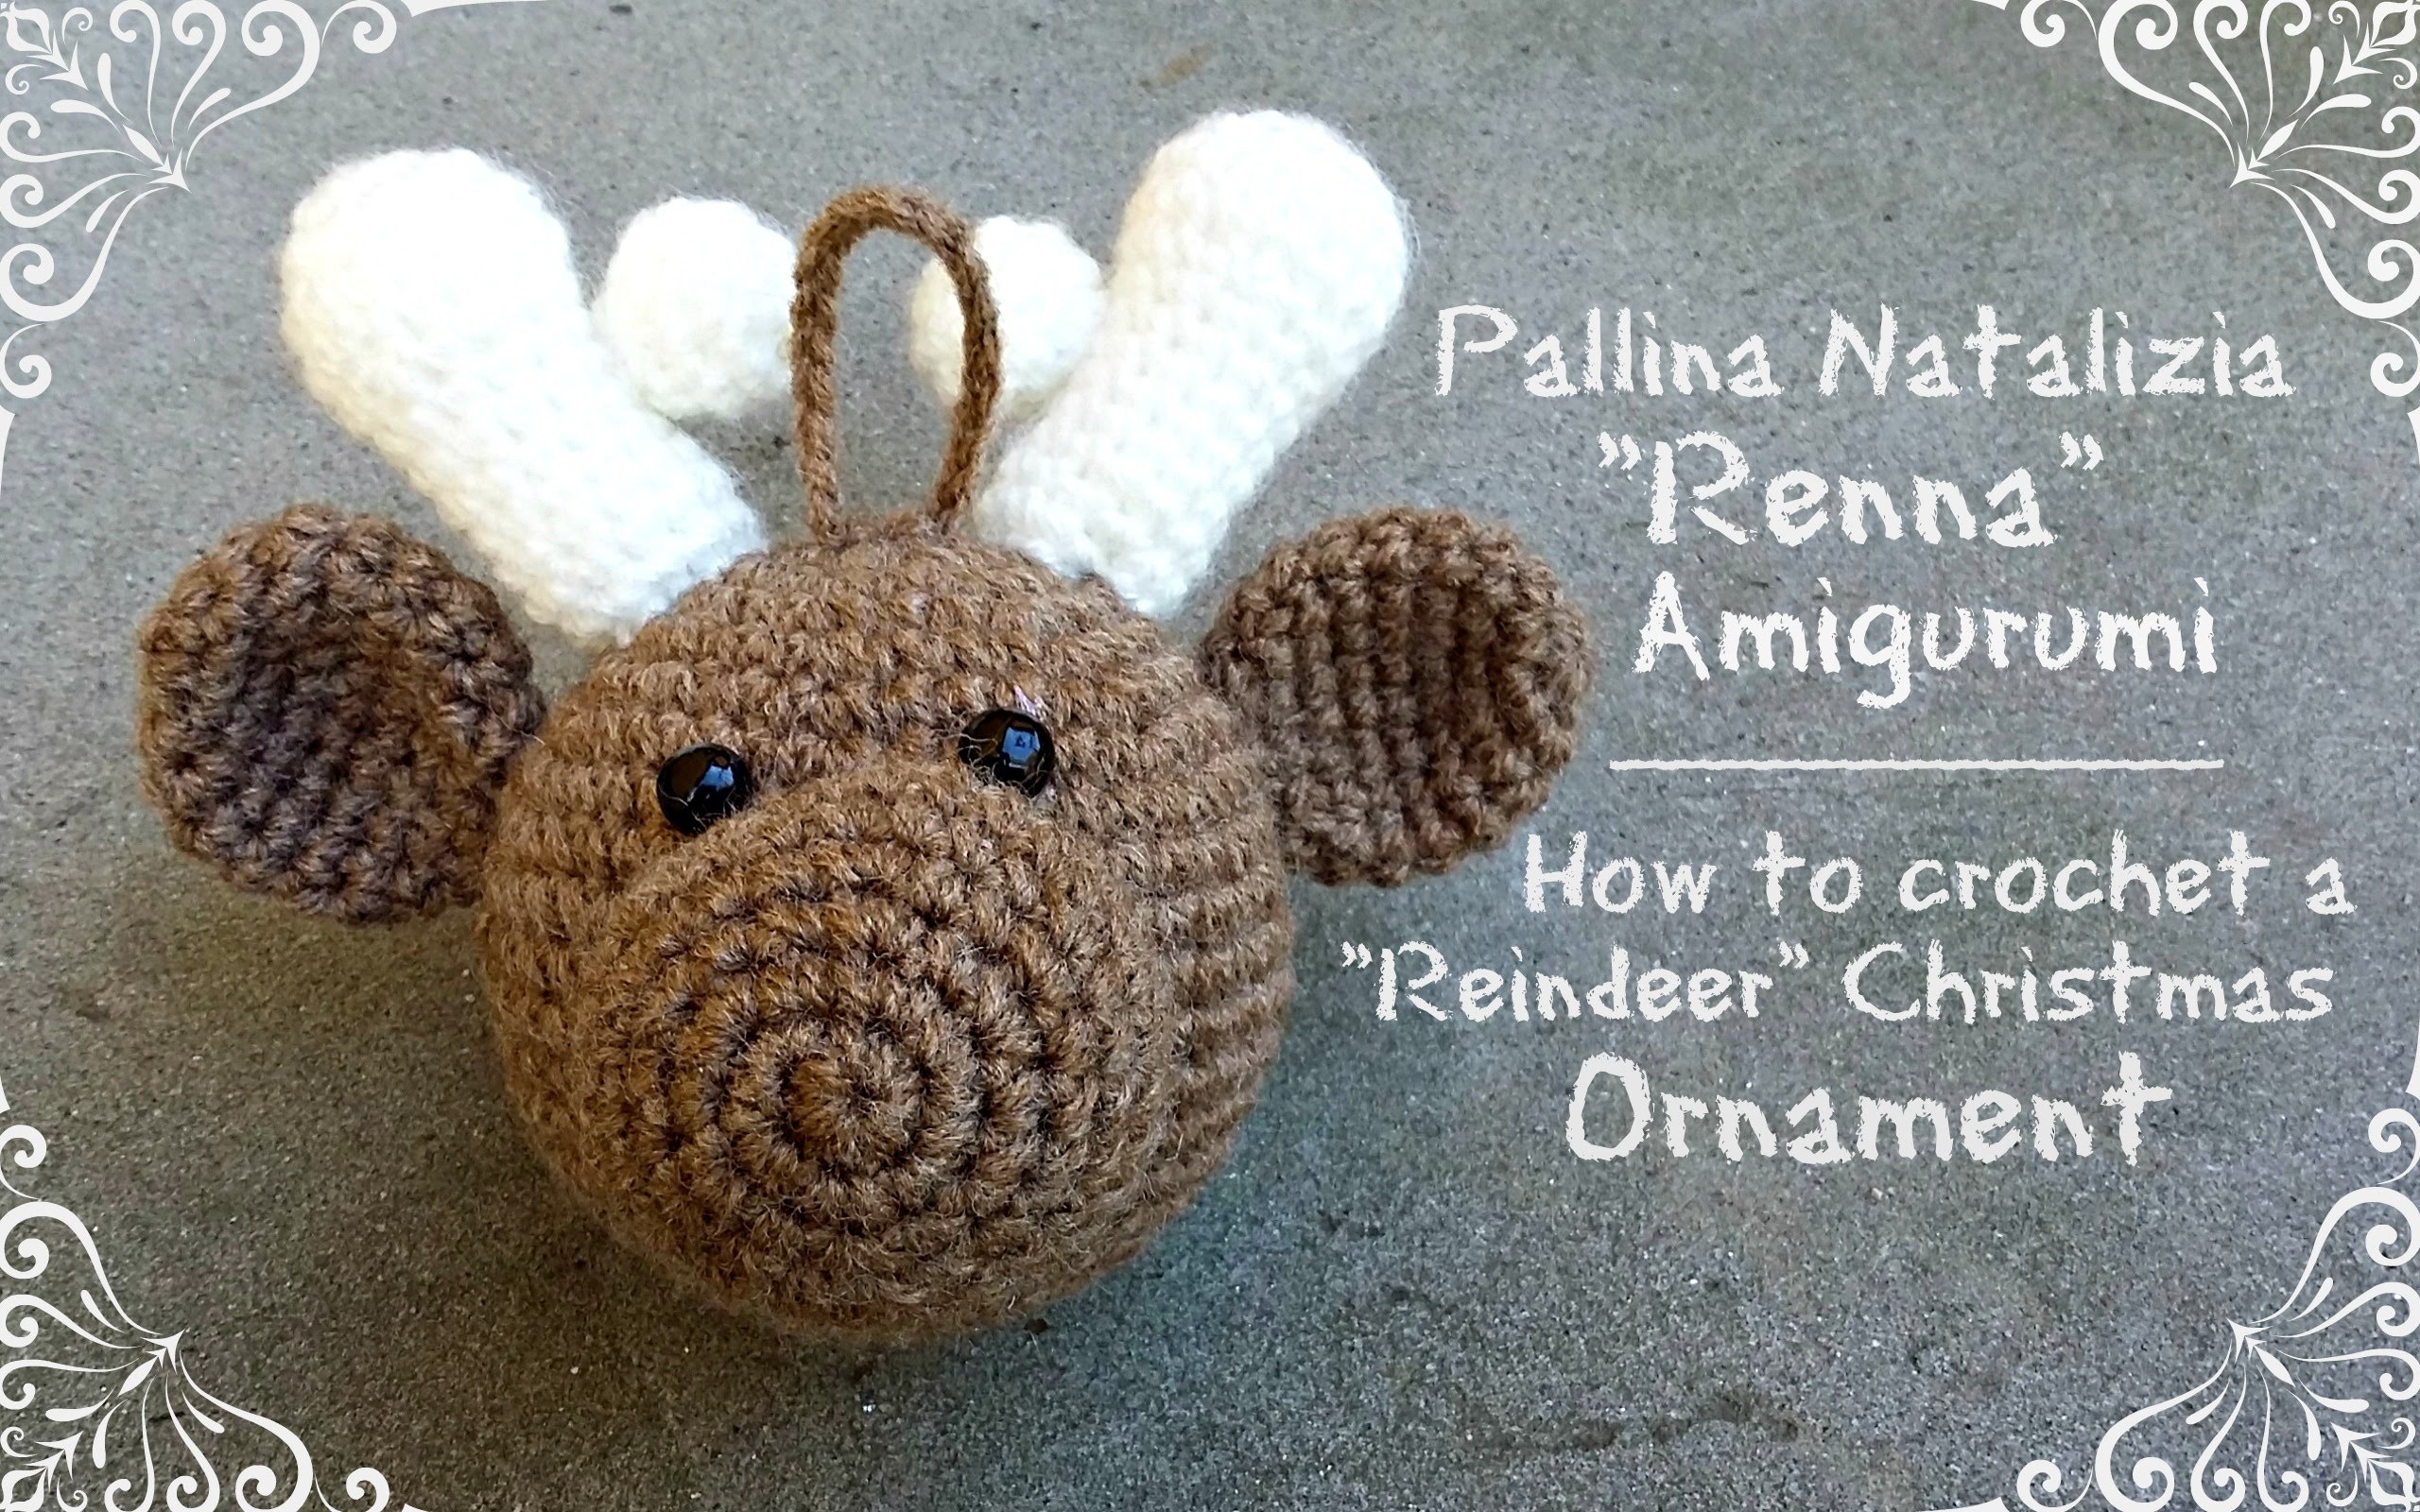 Pallina natalizia "Renna" Amigurumi | How to crochet a "Reindeer" ornament